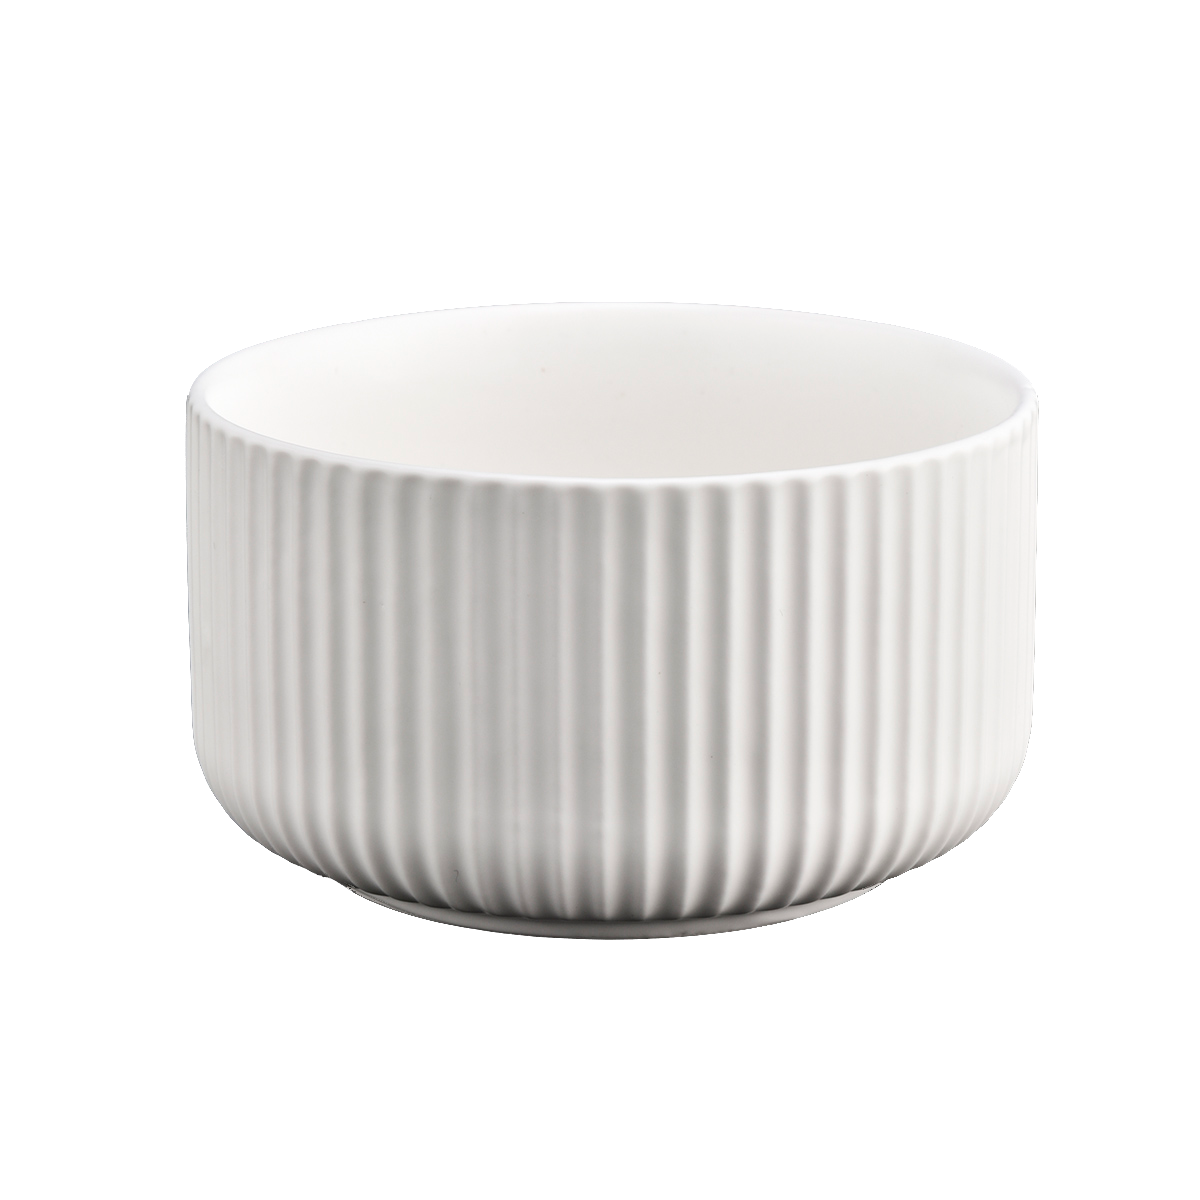 Portacandele in ceramica bianco opaco con linee